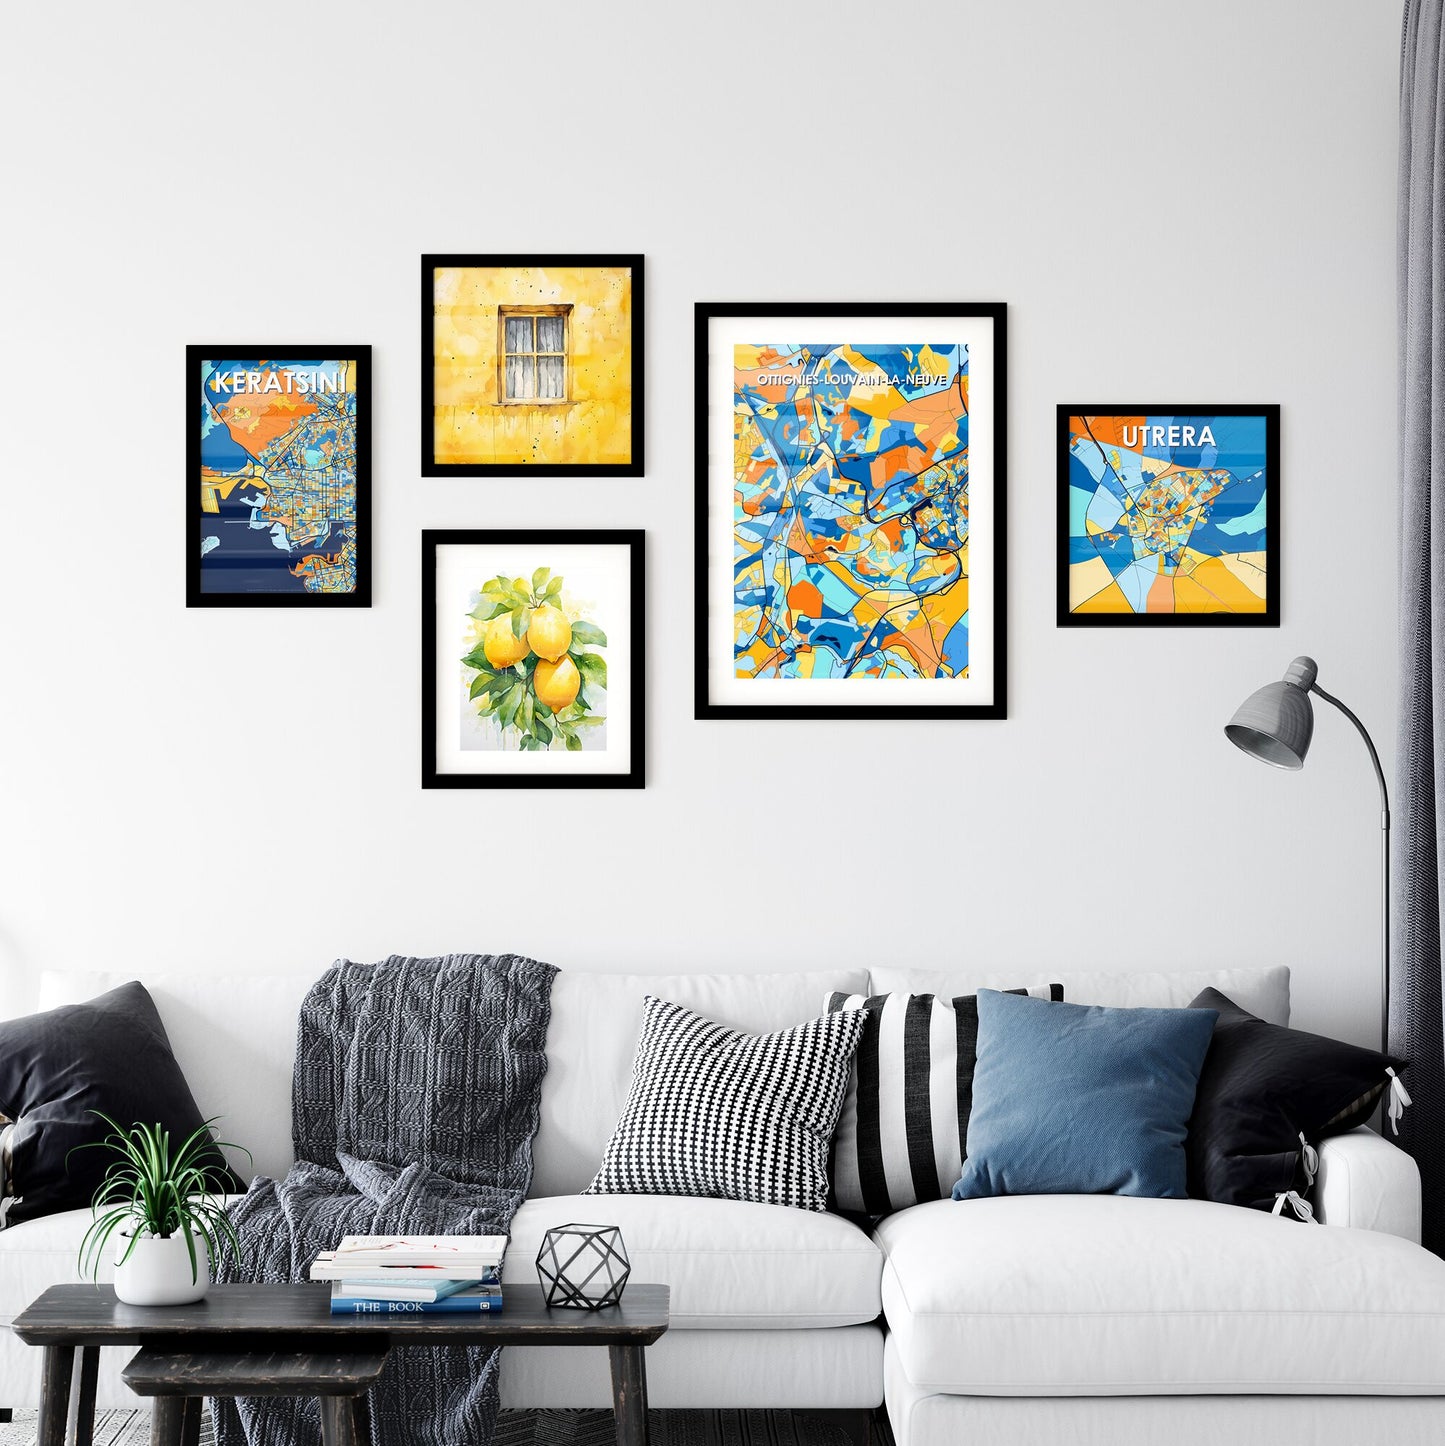 OTTIGNIES-LOUVAIN-LA-NEUVE BELGIUM Vibrant Colorful Art Map Poster Blue Orange